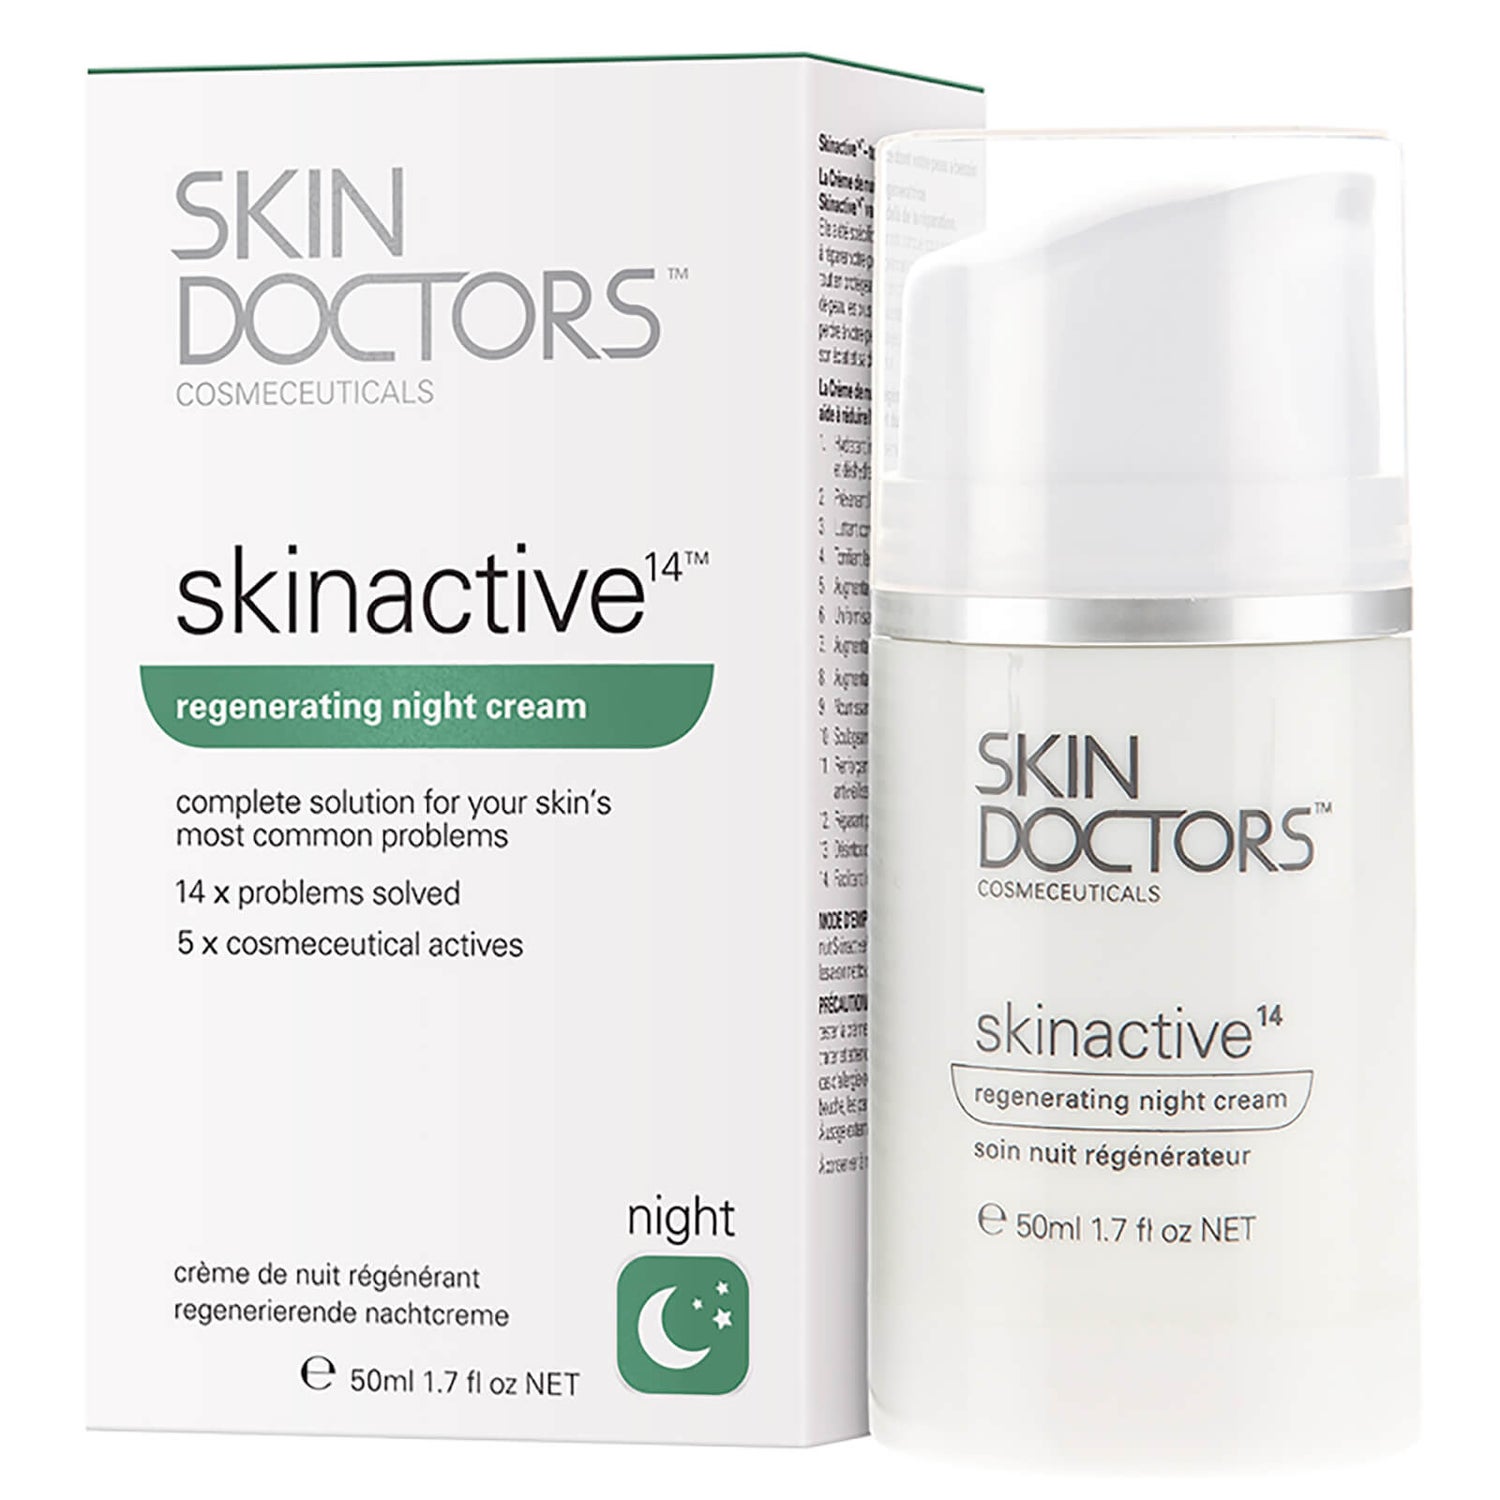 Crema de noche regenerante (50ml) Skin Doctors 14